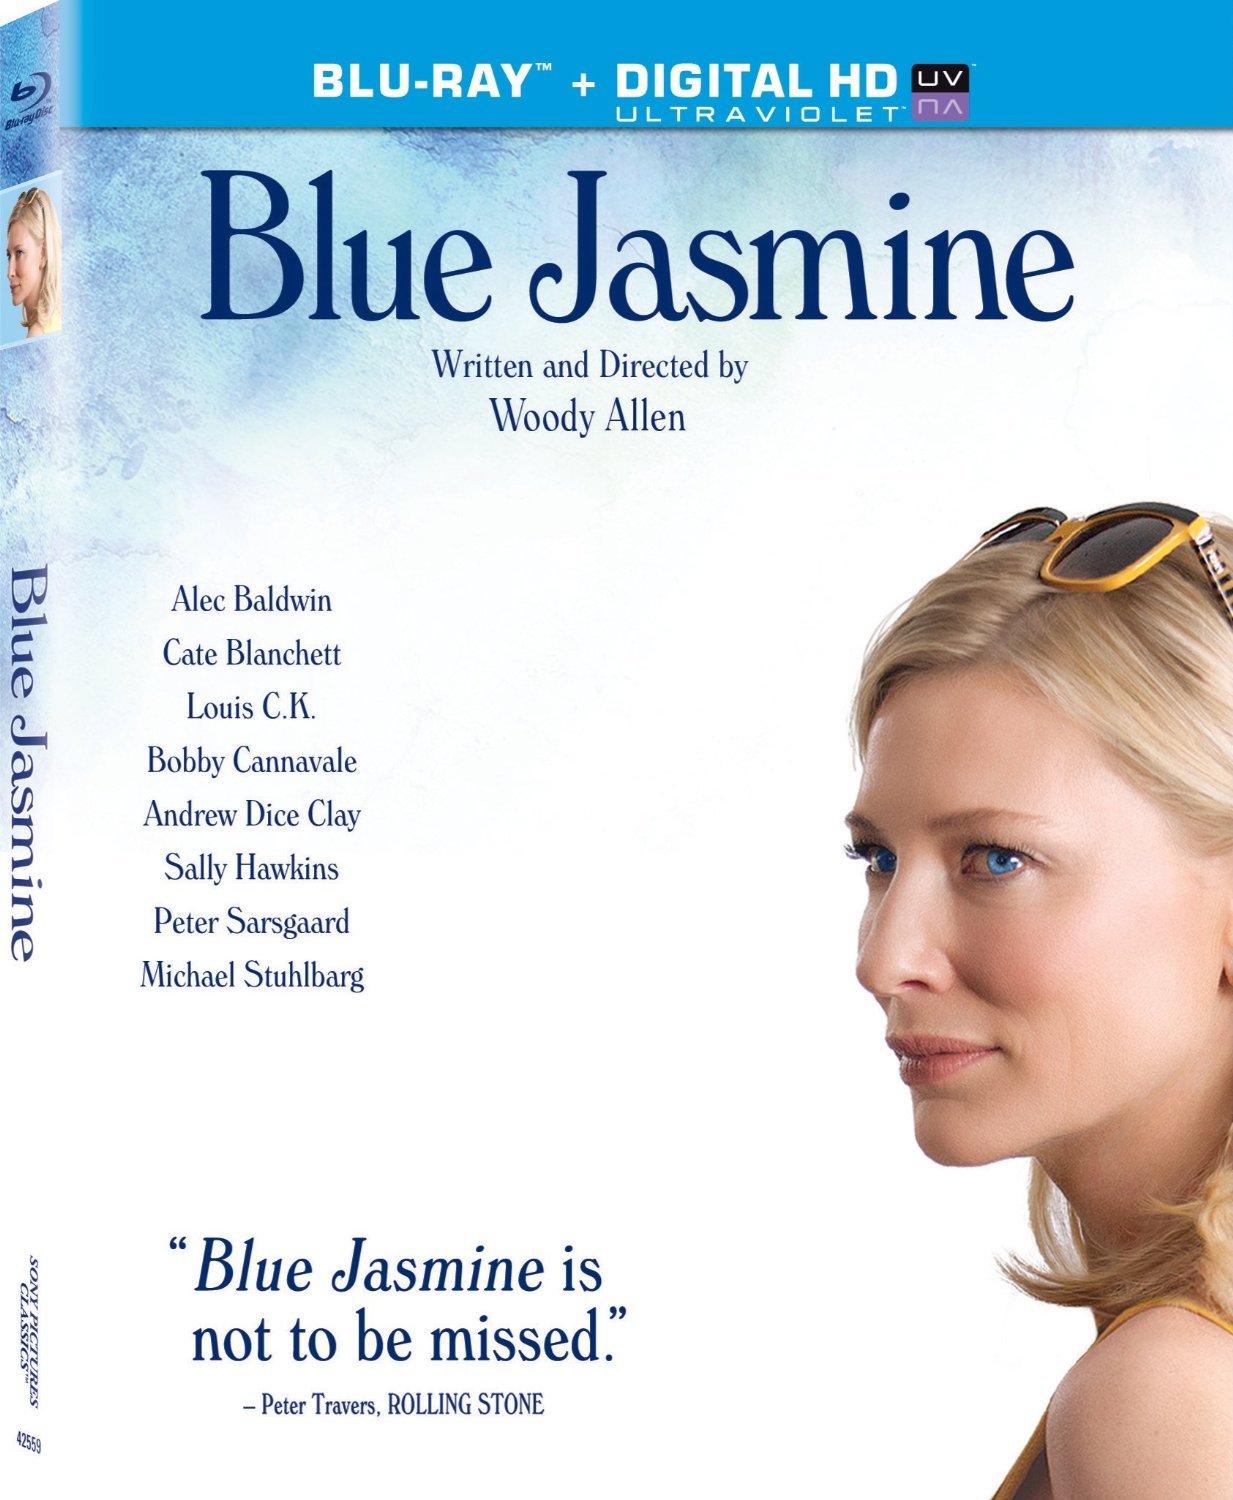 Tour the set: Blue Jasmine